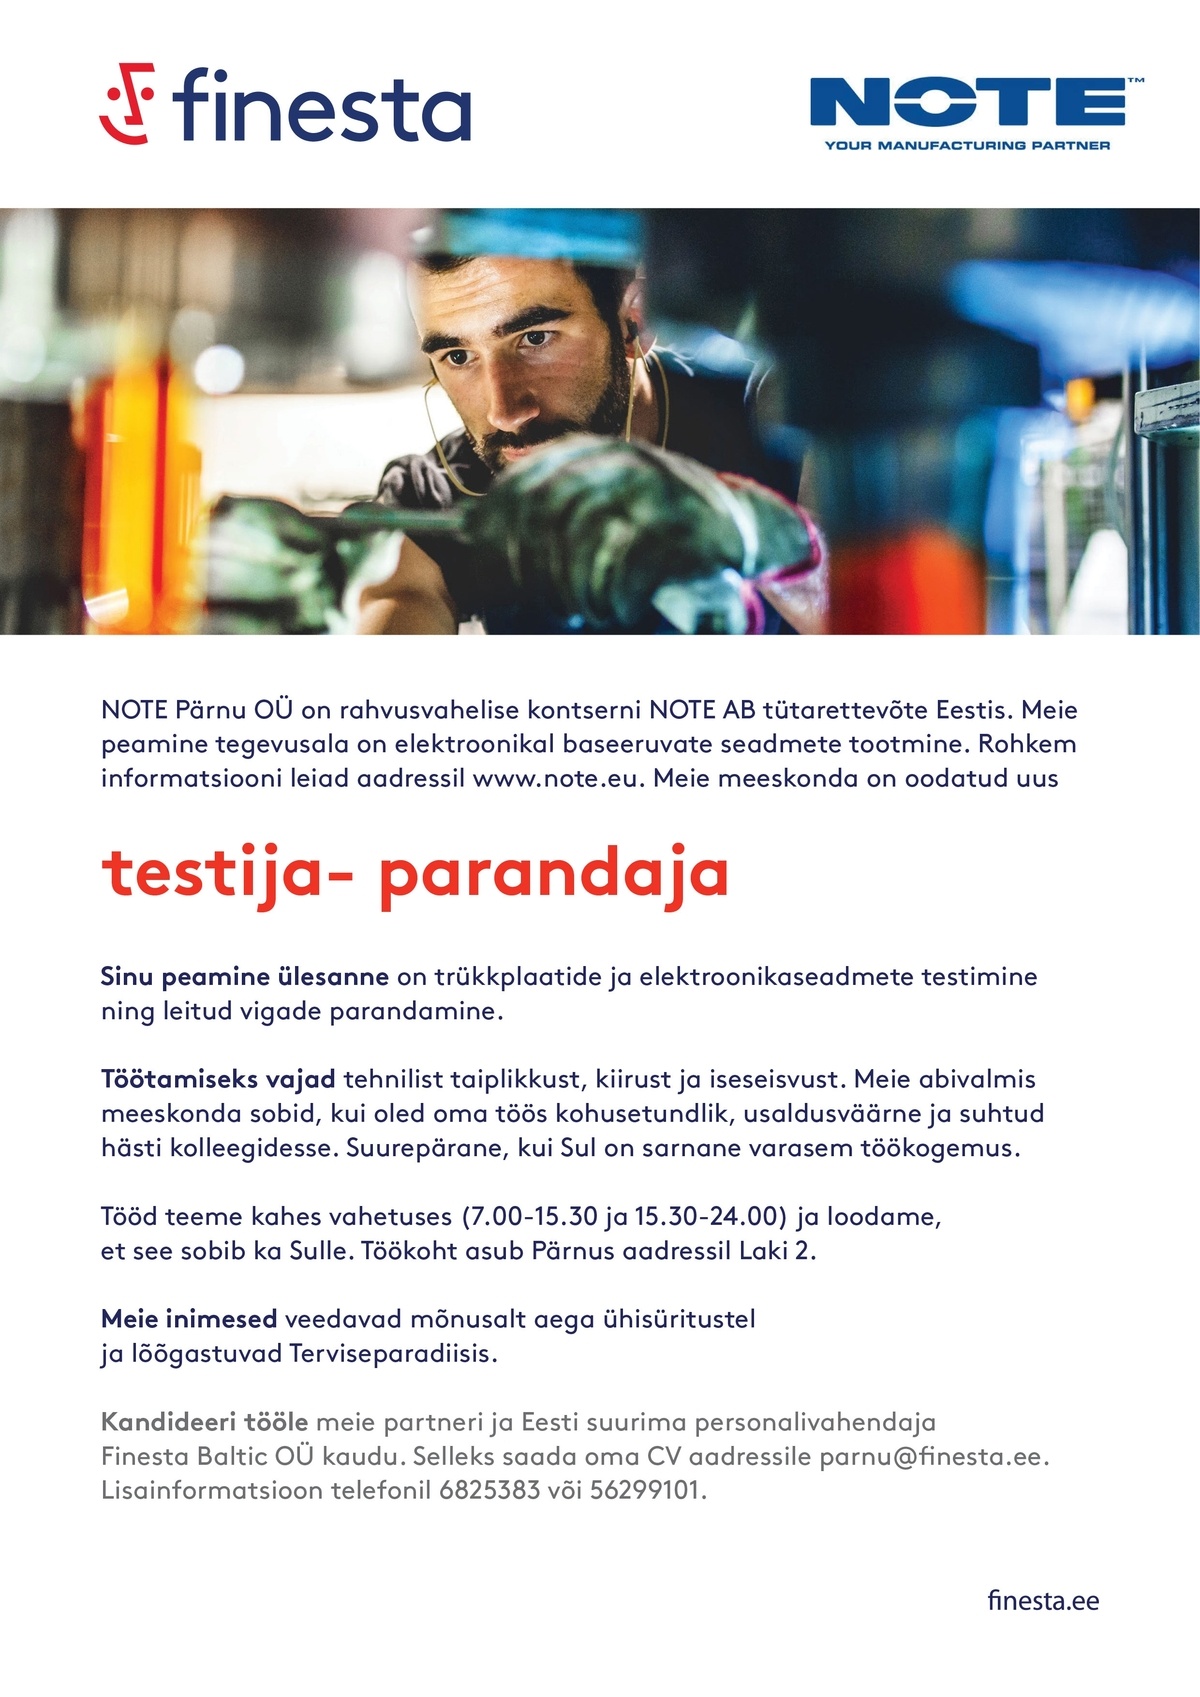 Finesta Baltic OÜ Testija-parandaja